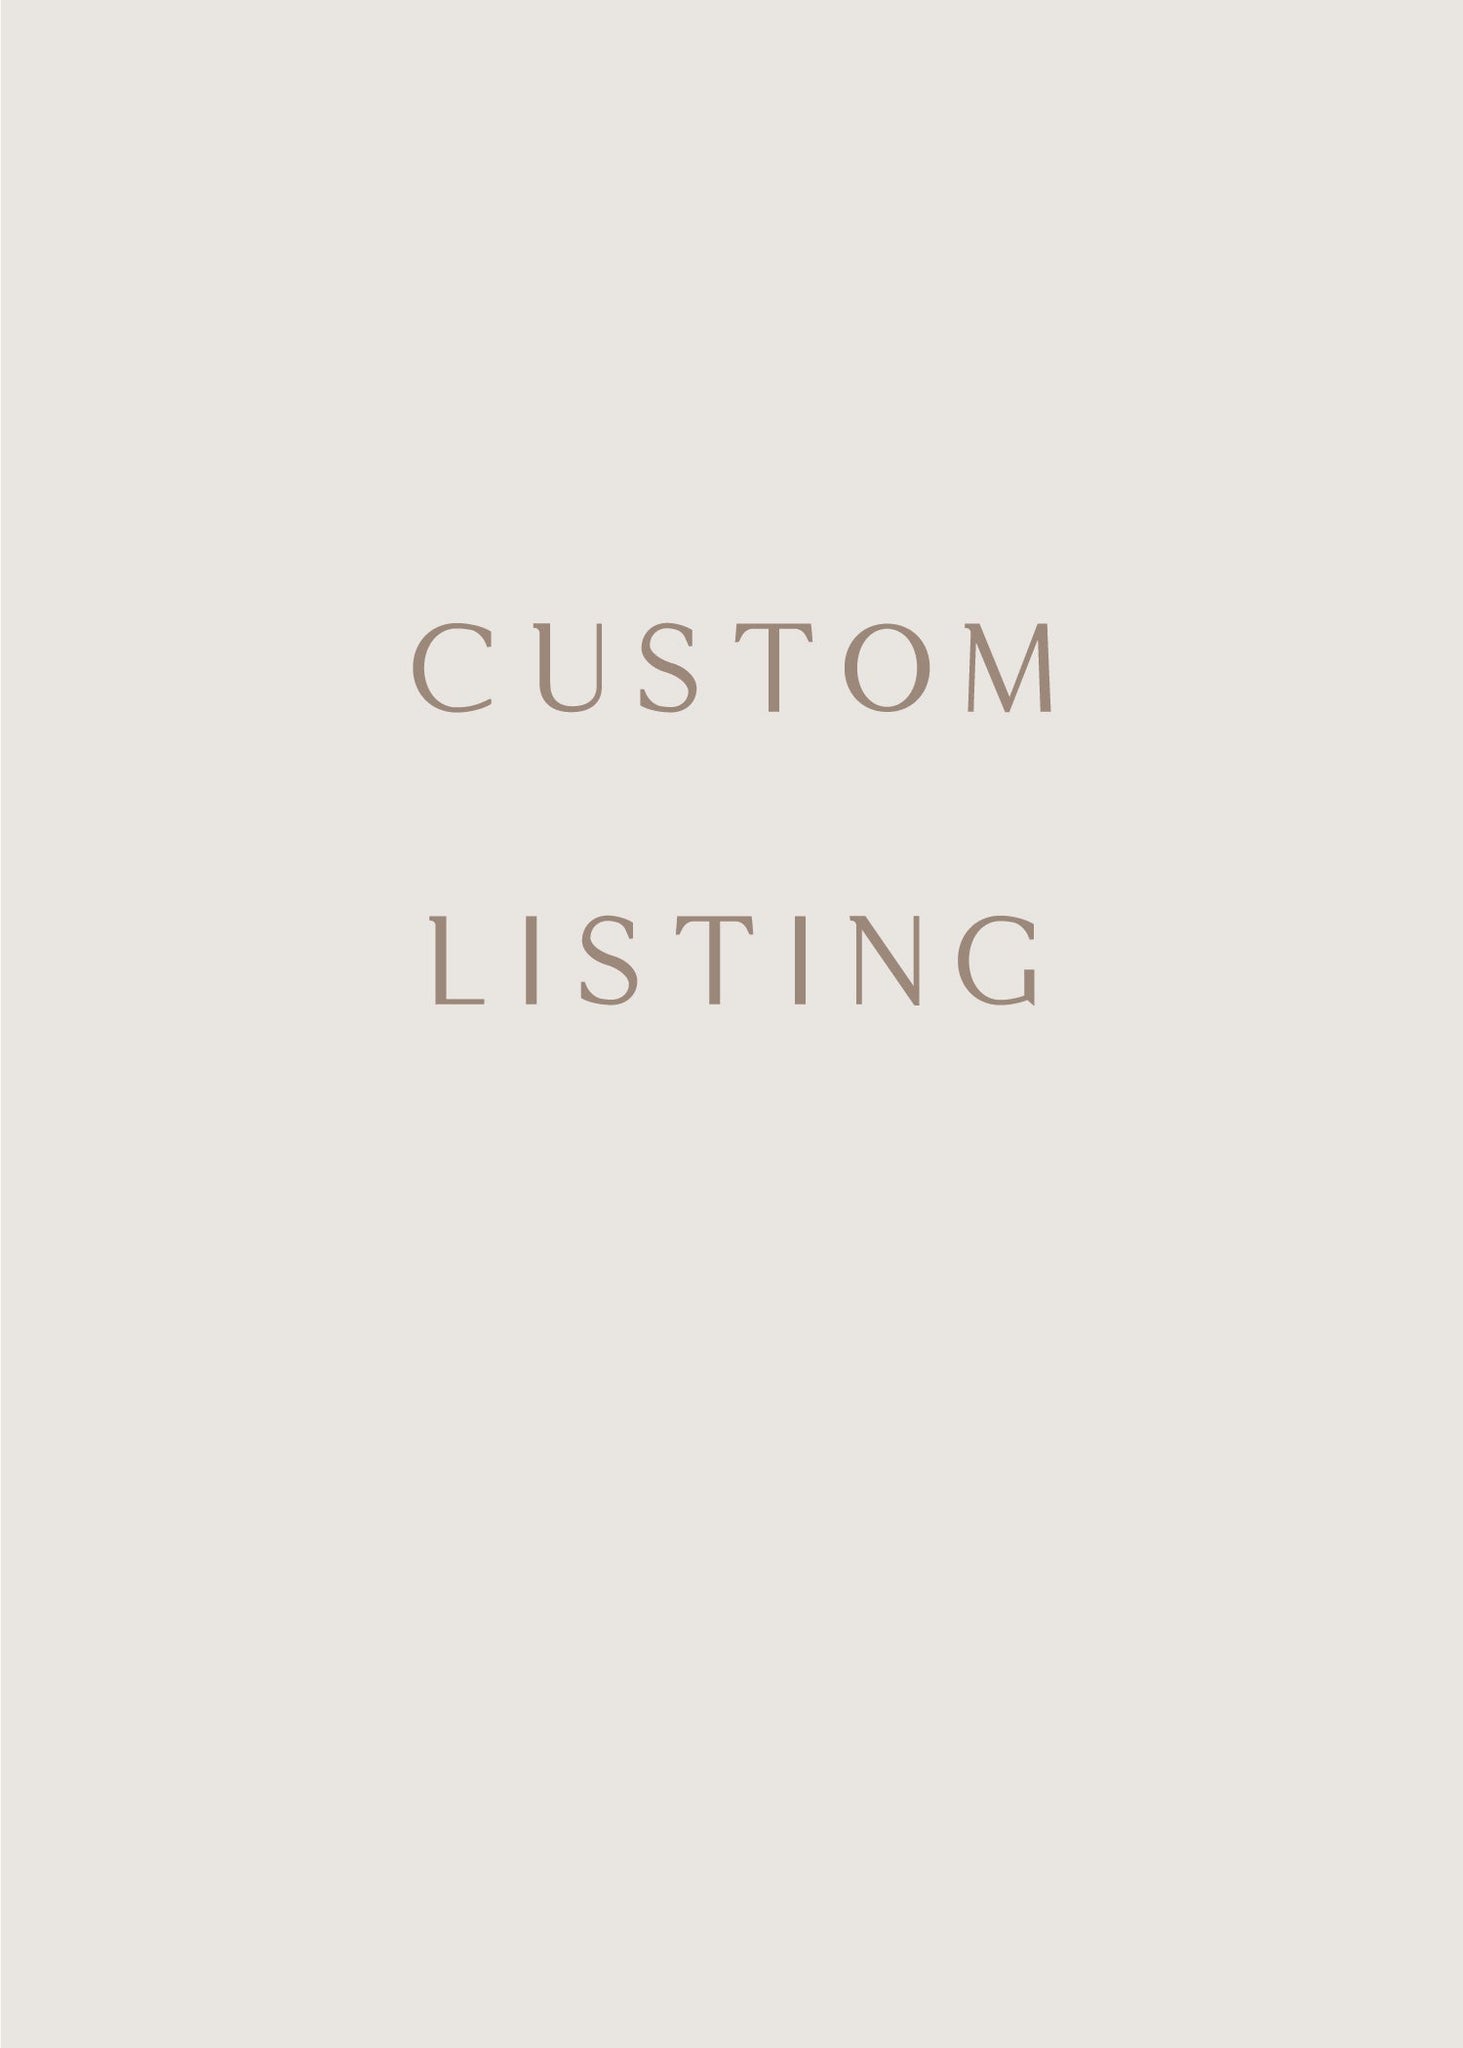 Custom listing_Calligraphy Logo Design